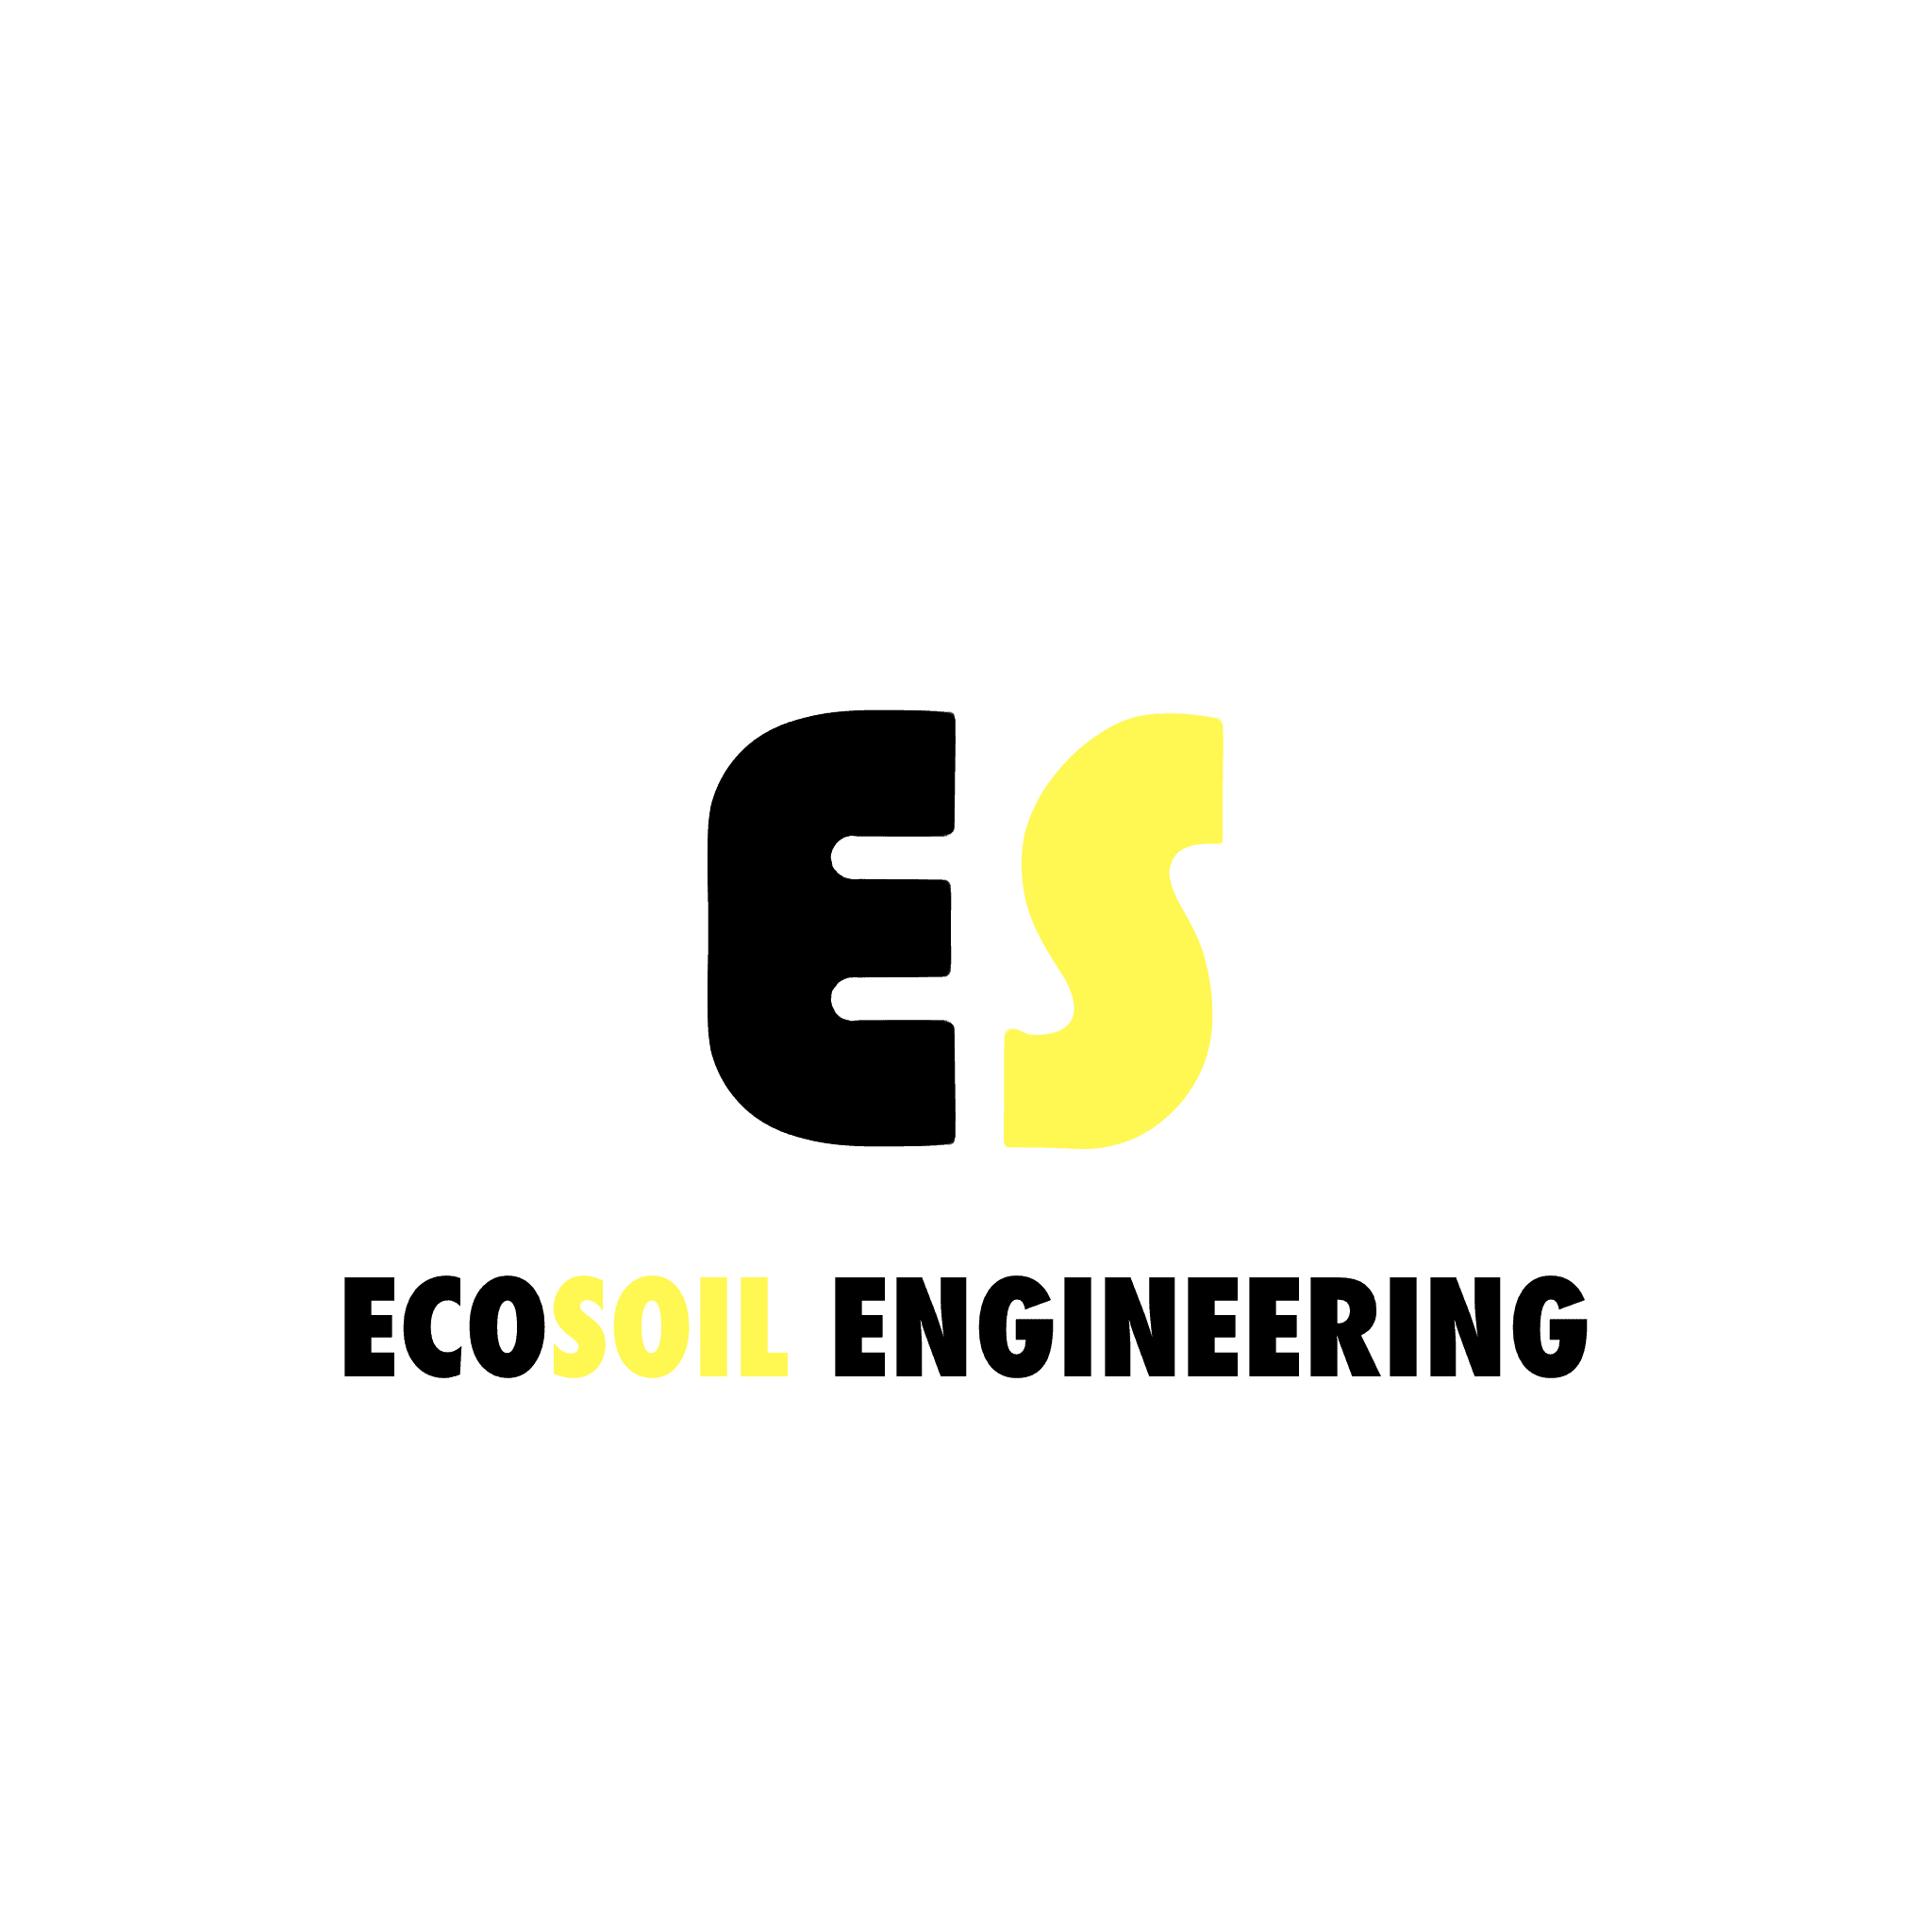 ECOSOIL ENGINEERING PTE. LTD